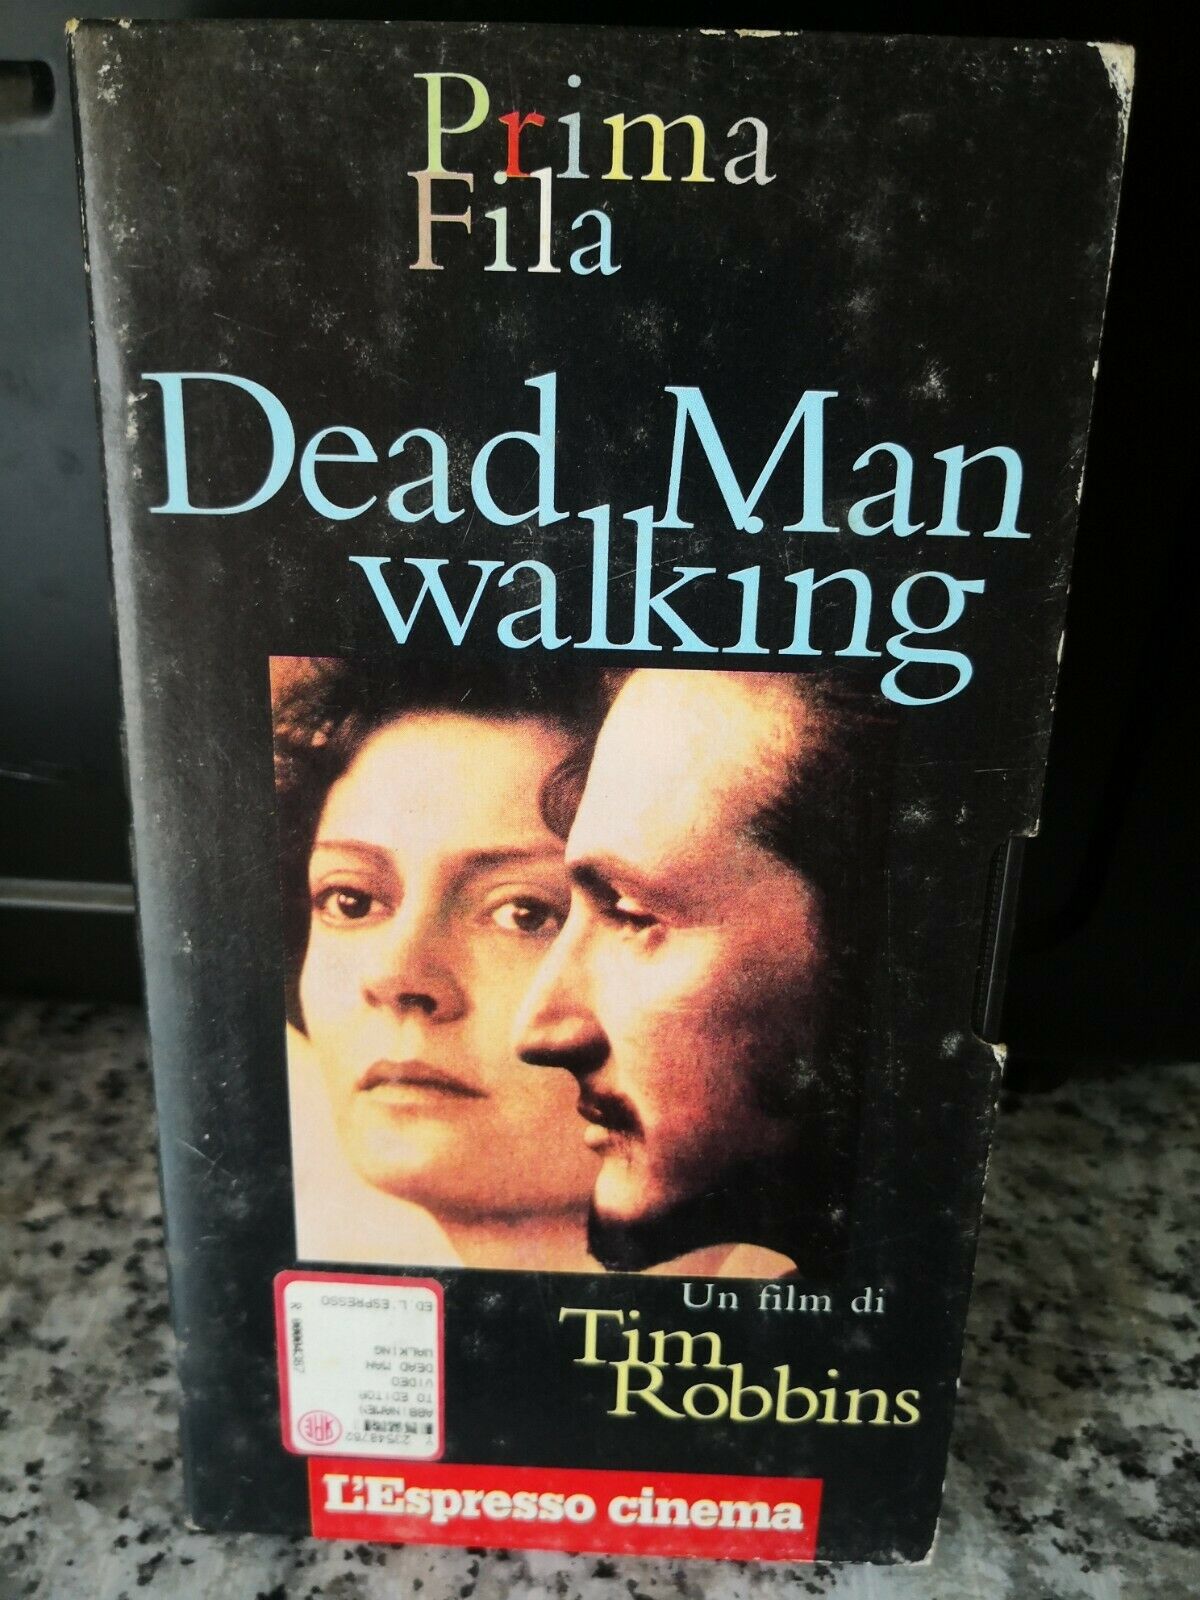 Dead Man walking - vhs - 1995 - l'espresso cinema -F